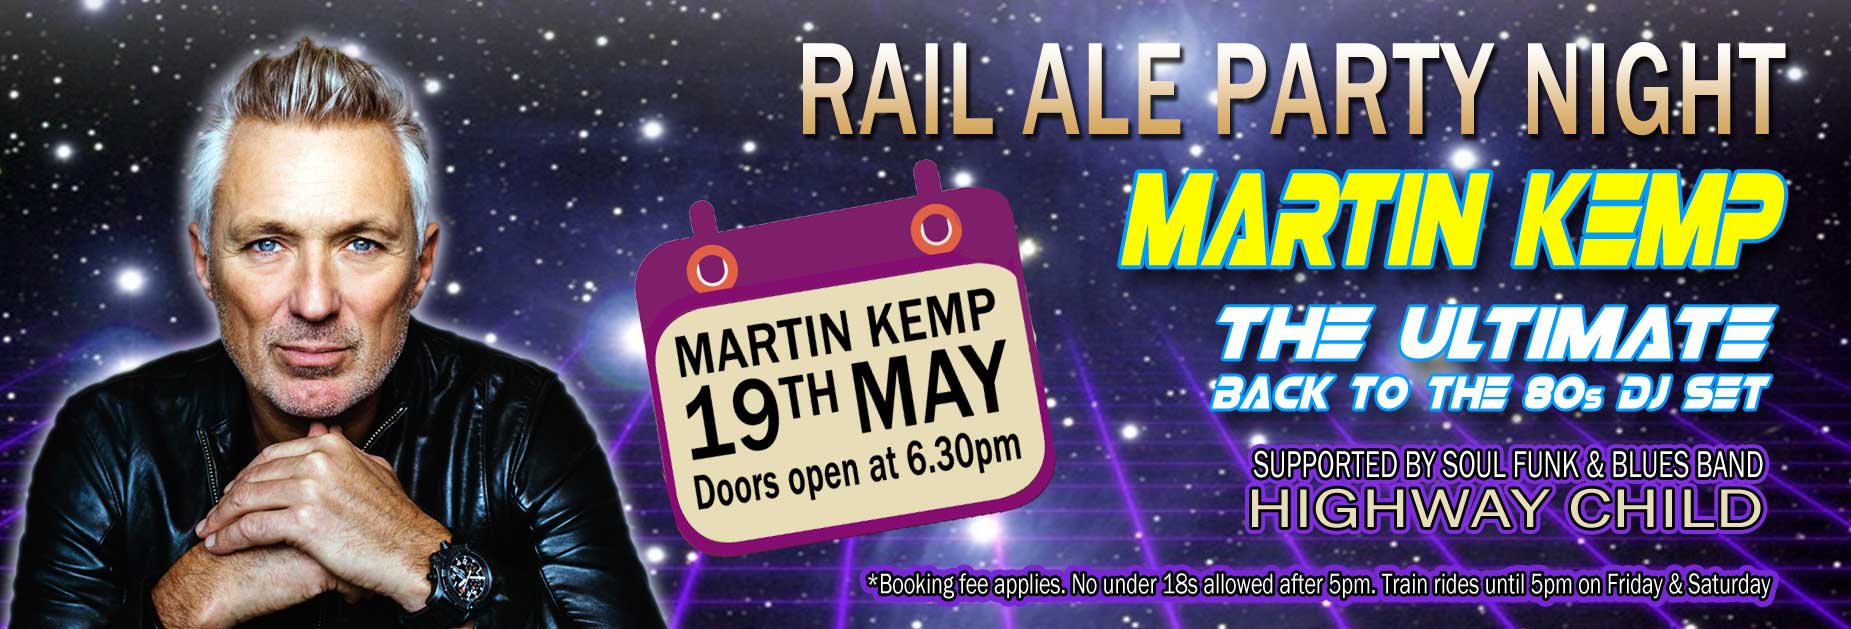 Martin Kemp Live Rail Ale Party Night